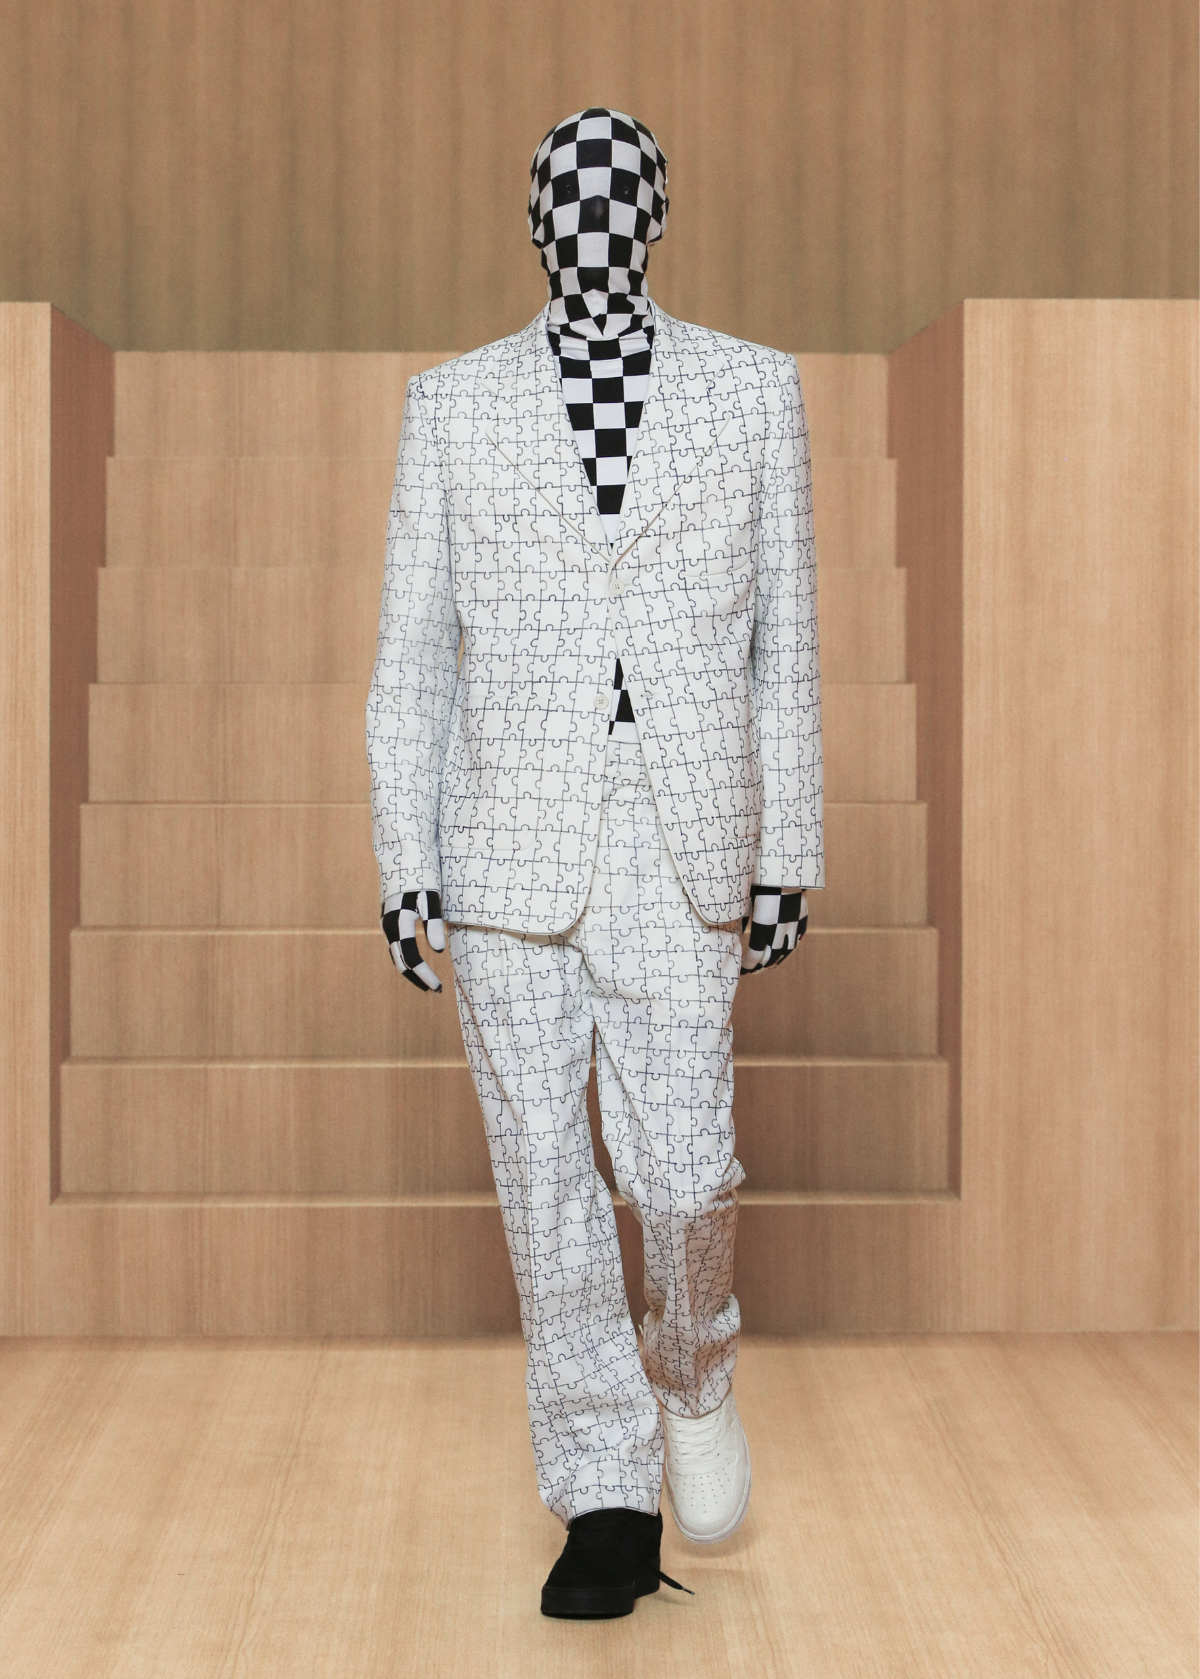 Louis Vuitton Presents Its New Men’s Spring-Summer 2022 Collection By Virgil Abloh: Amen Break